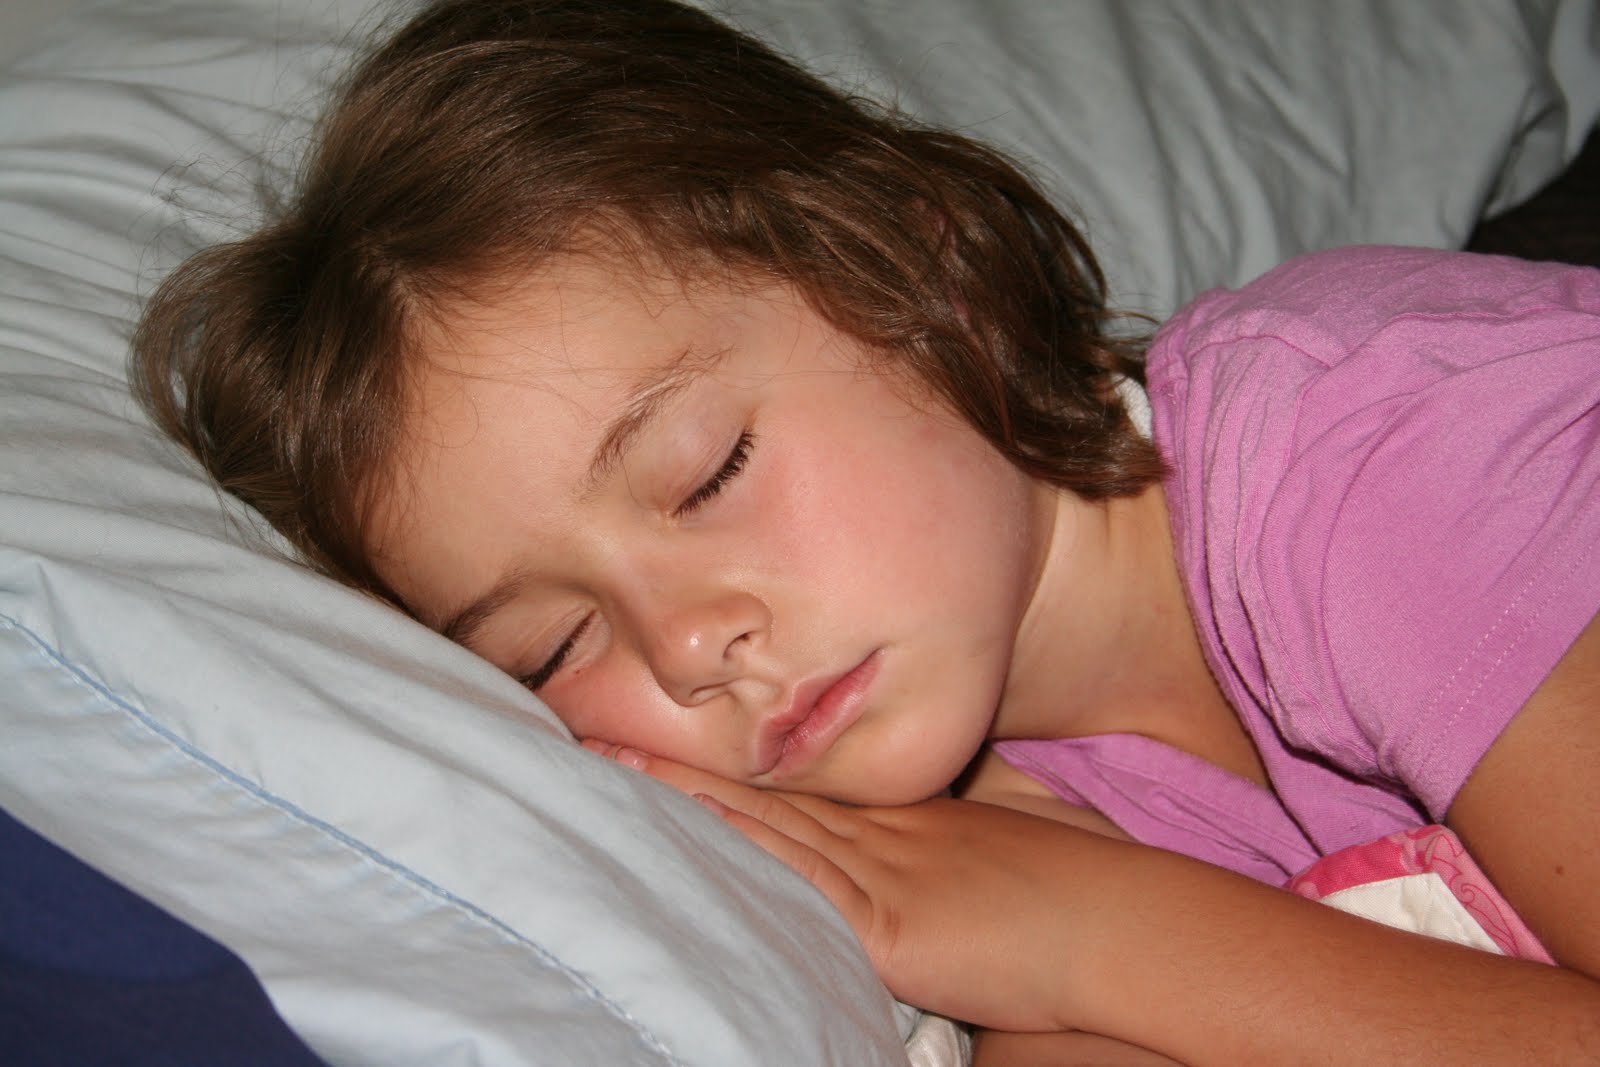 Т спящую подругу. Sleeping sister гайд. Ru Sleep. Sleep girl (1).